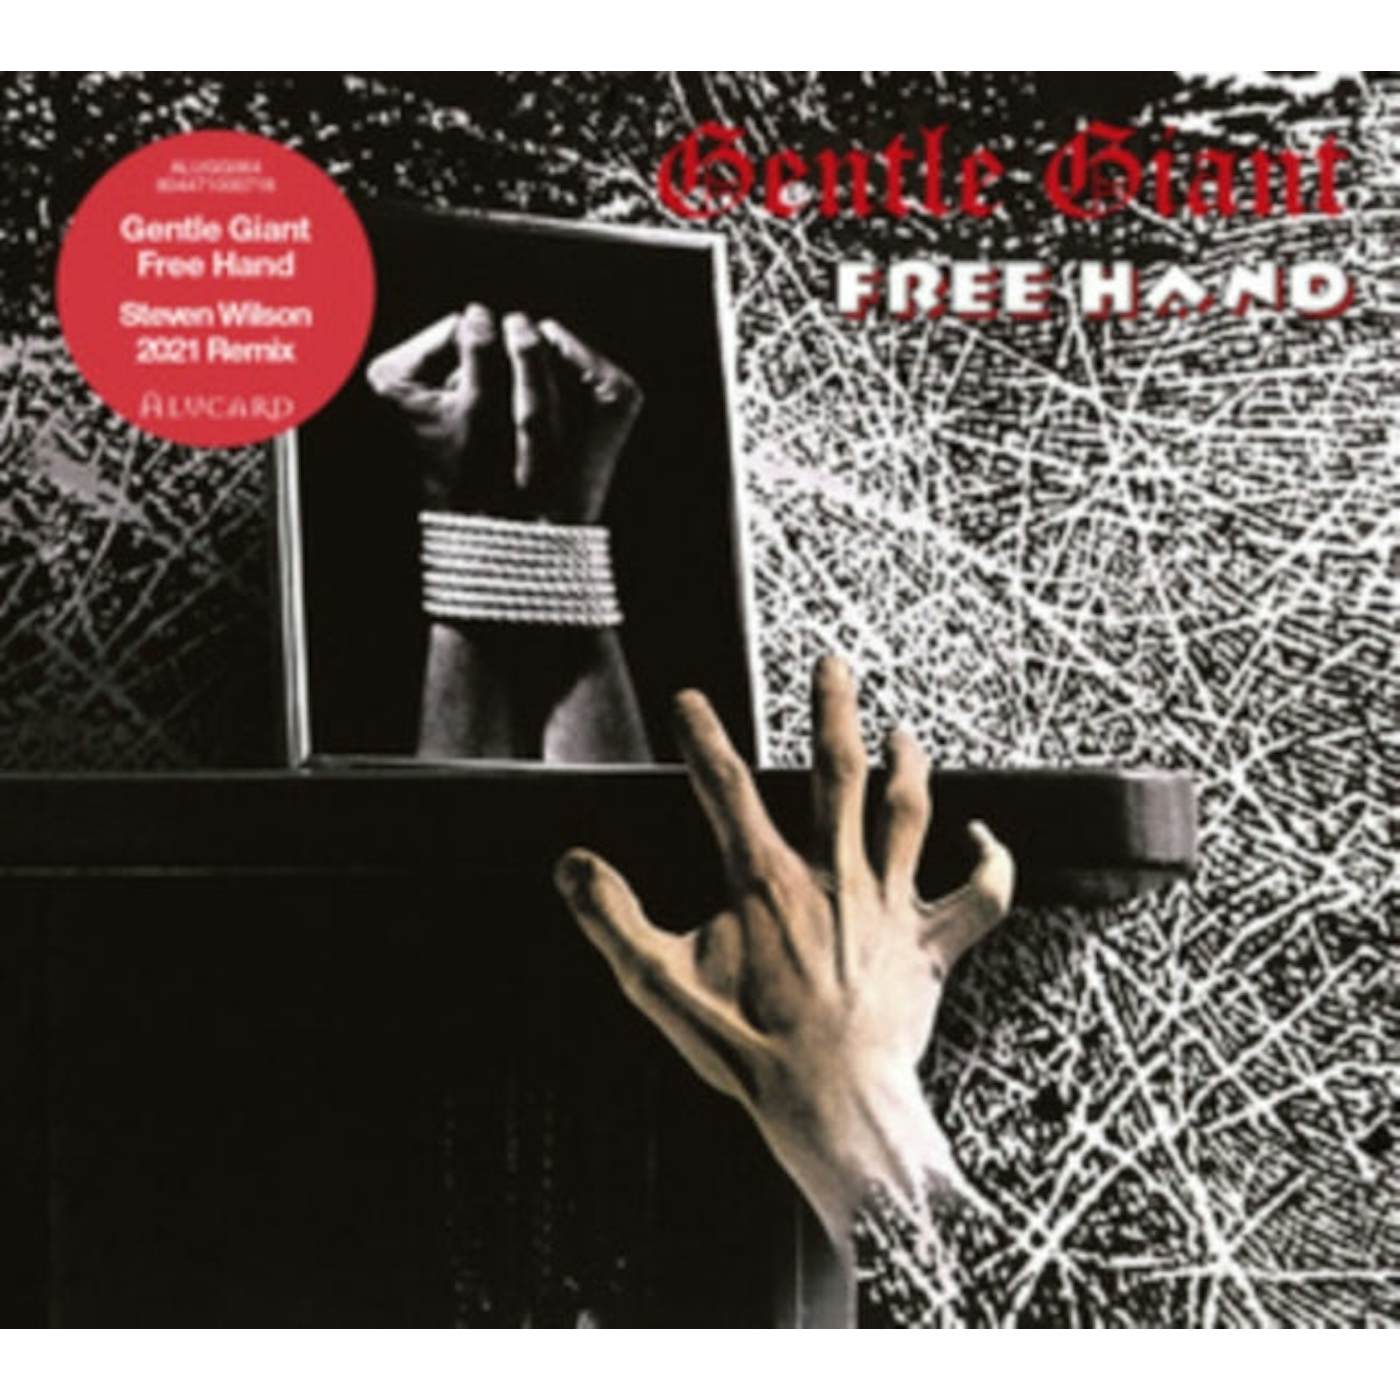 Gentle Giant LP Vinyl Record - Free Hand (Steven Wilson Mix & Flat Mix) (White Vinyl)